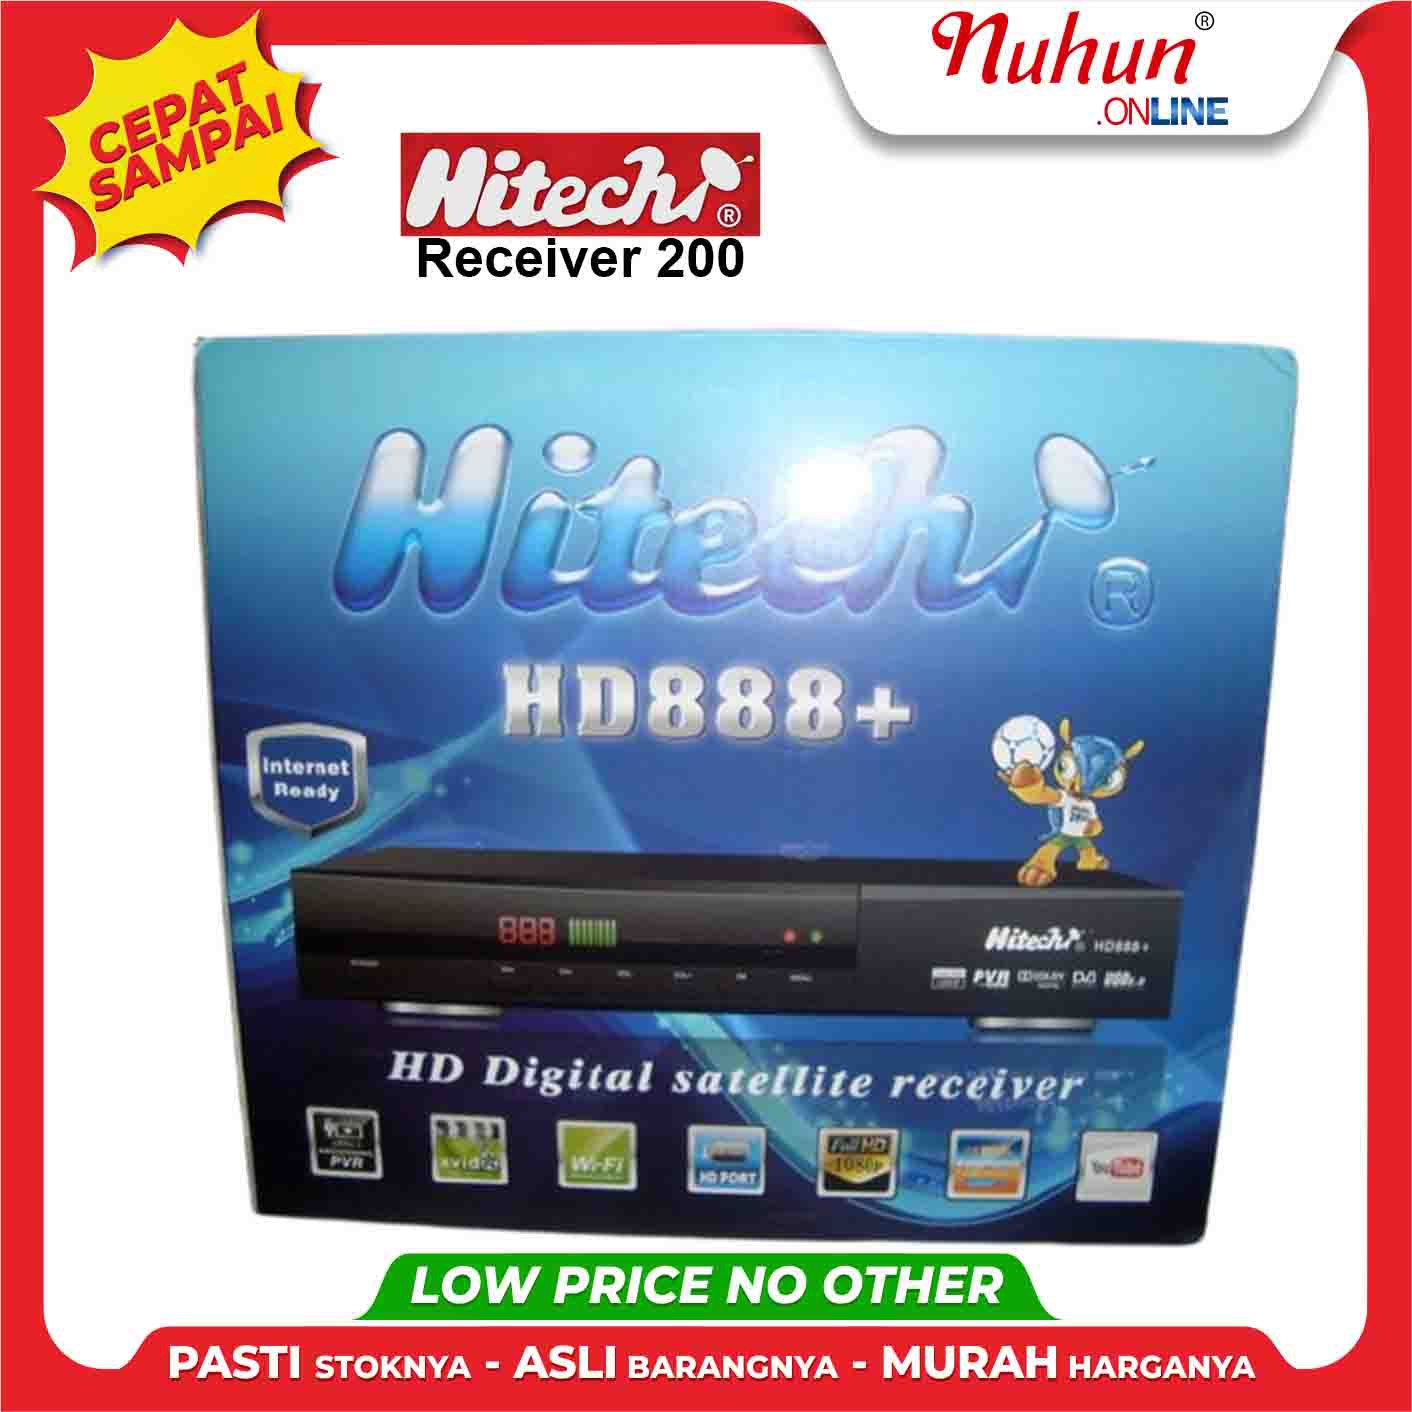 Hitech Receiver 200